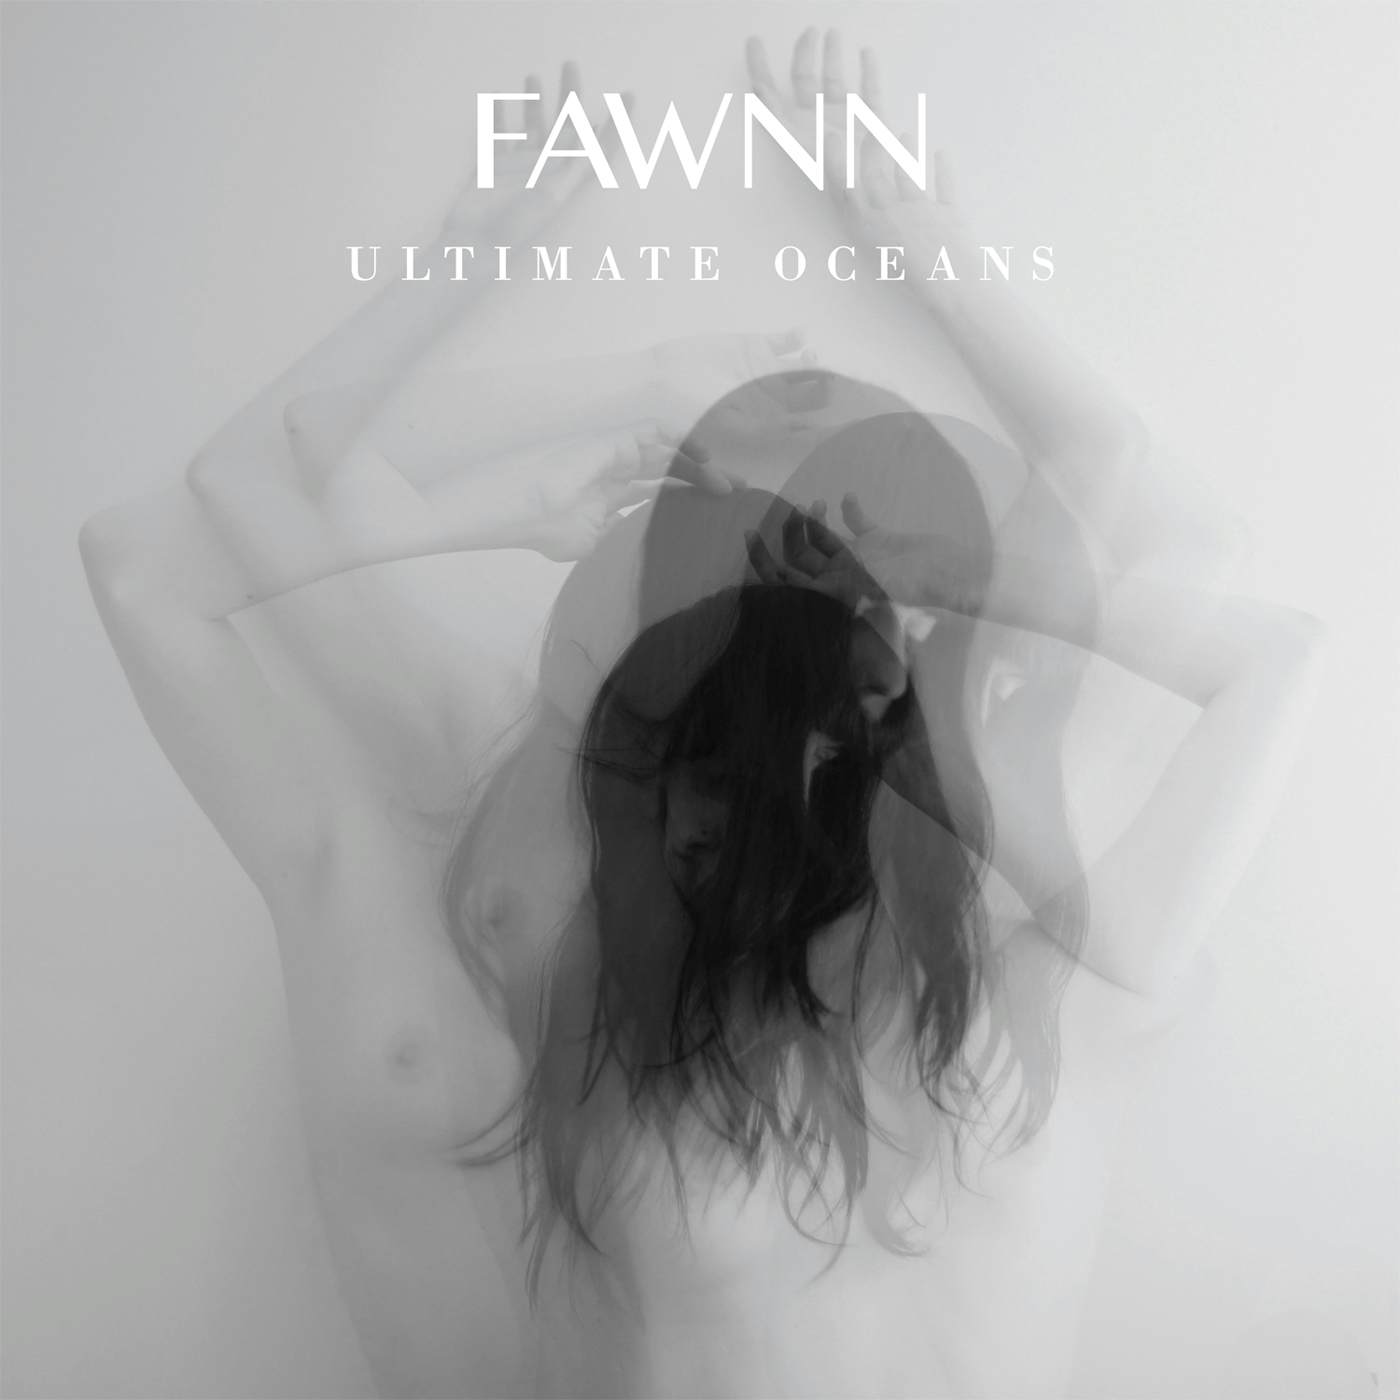 FAWNN ULTIMATE OCEAN Vinyl Record - UK Release